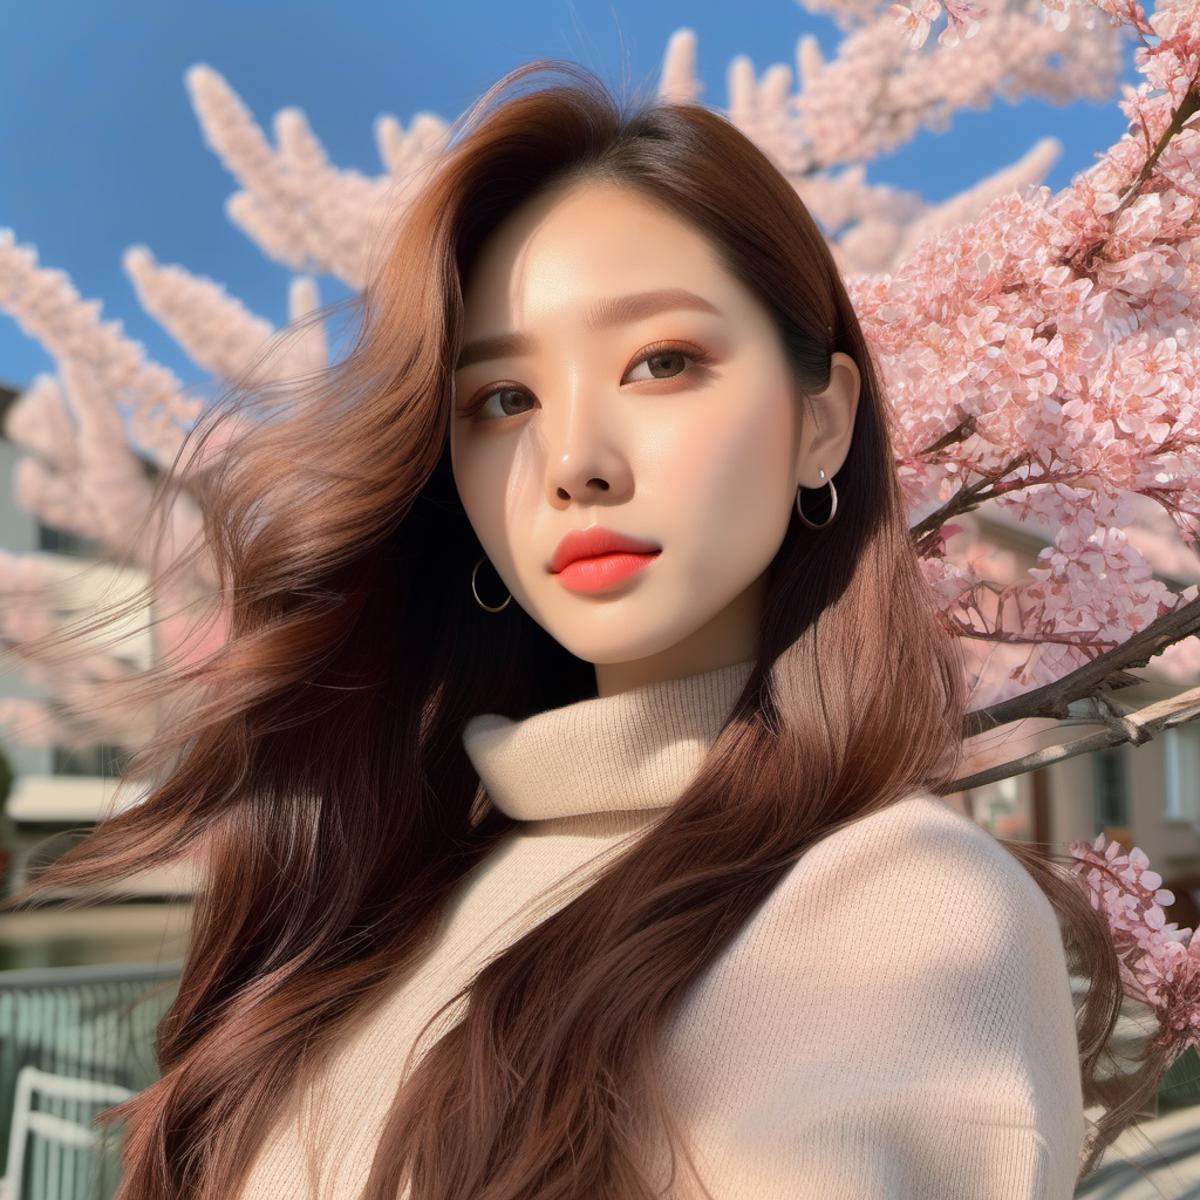 Korean Instagram Style XL image by K_LoRA